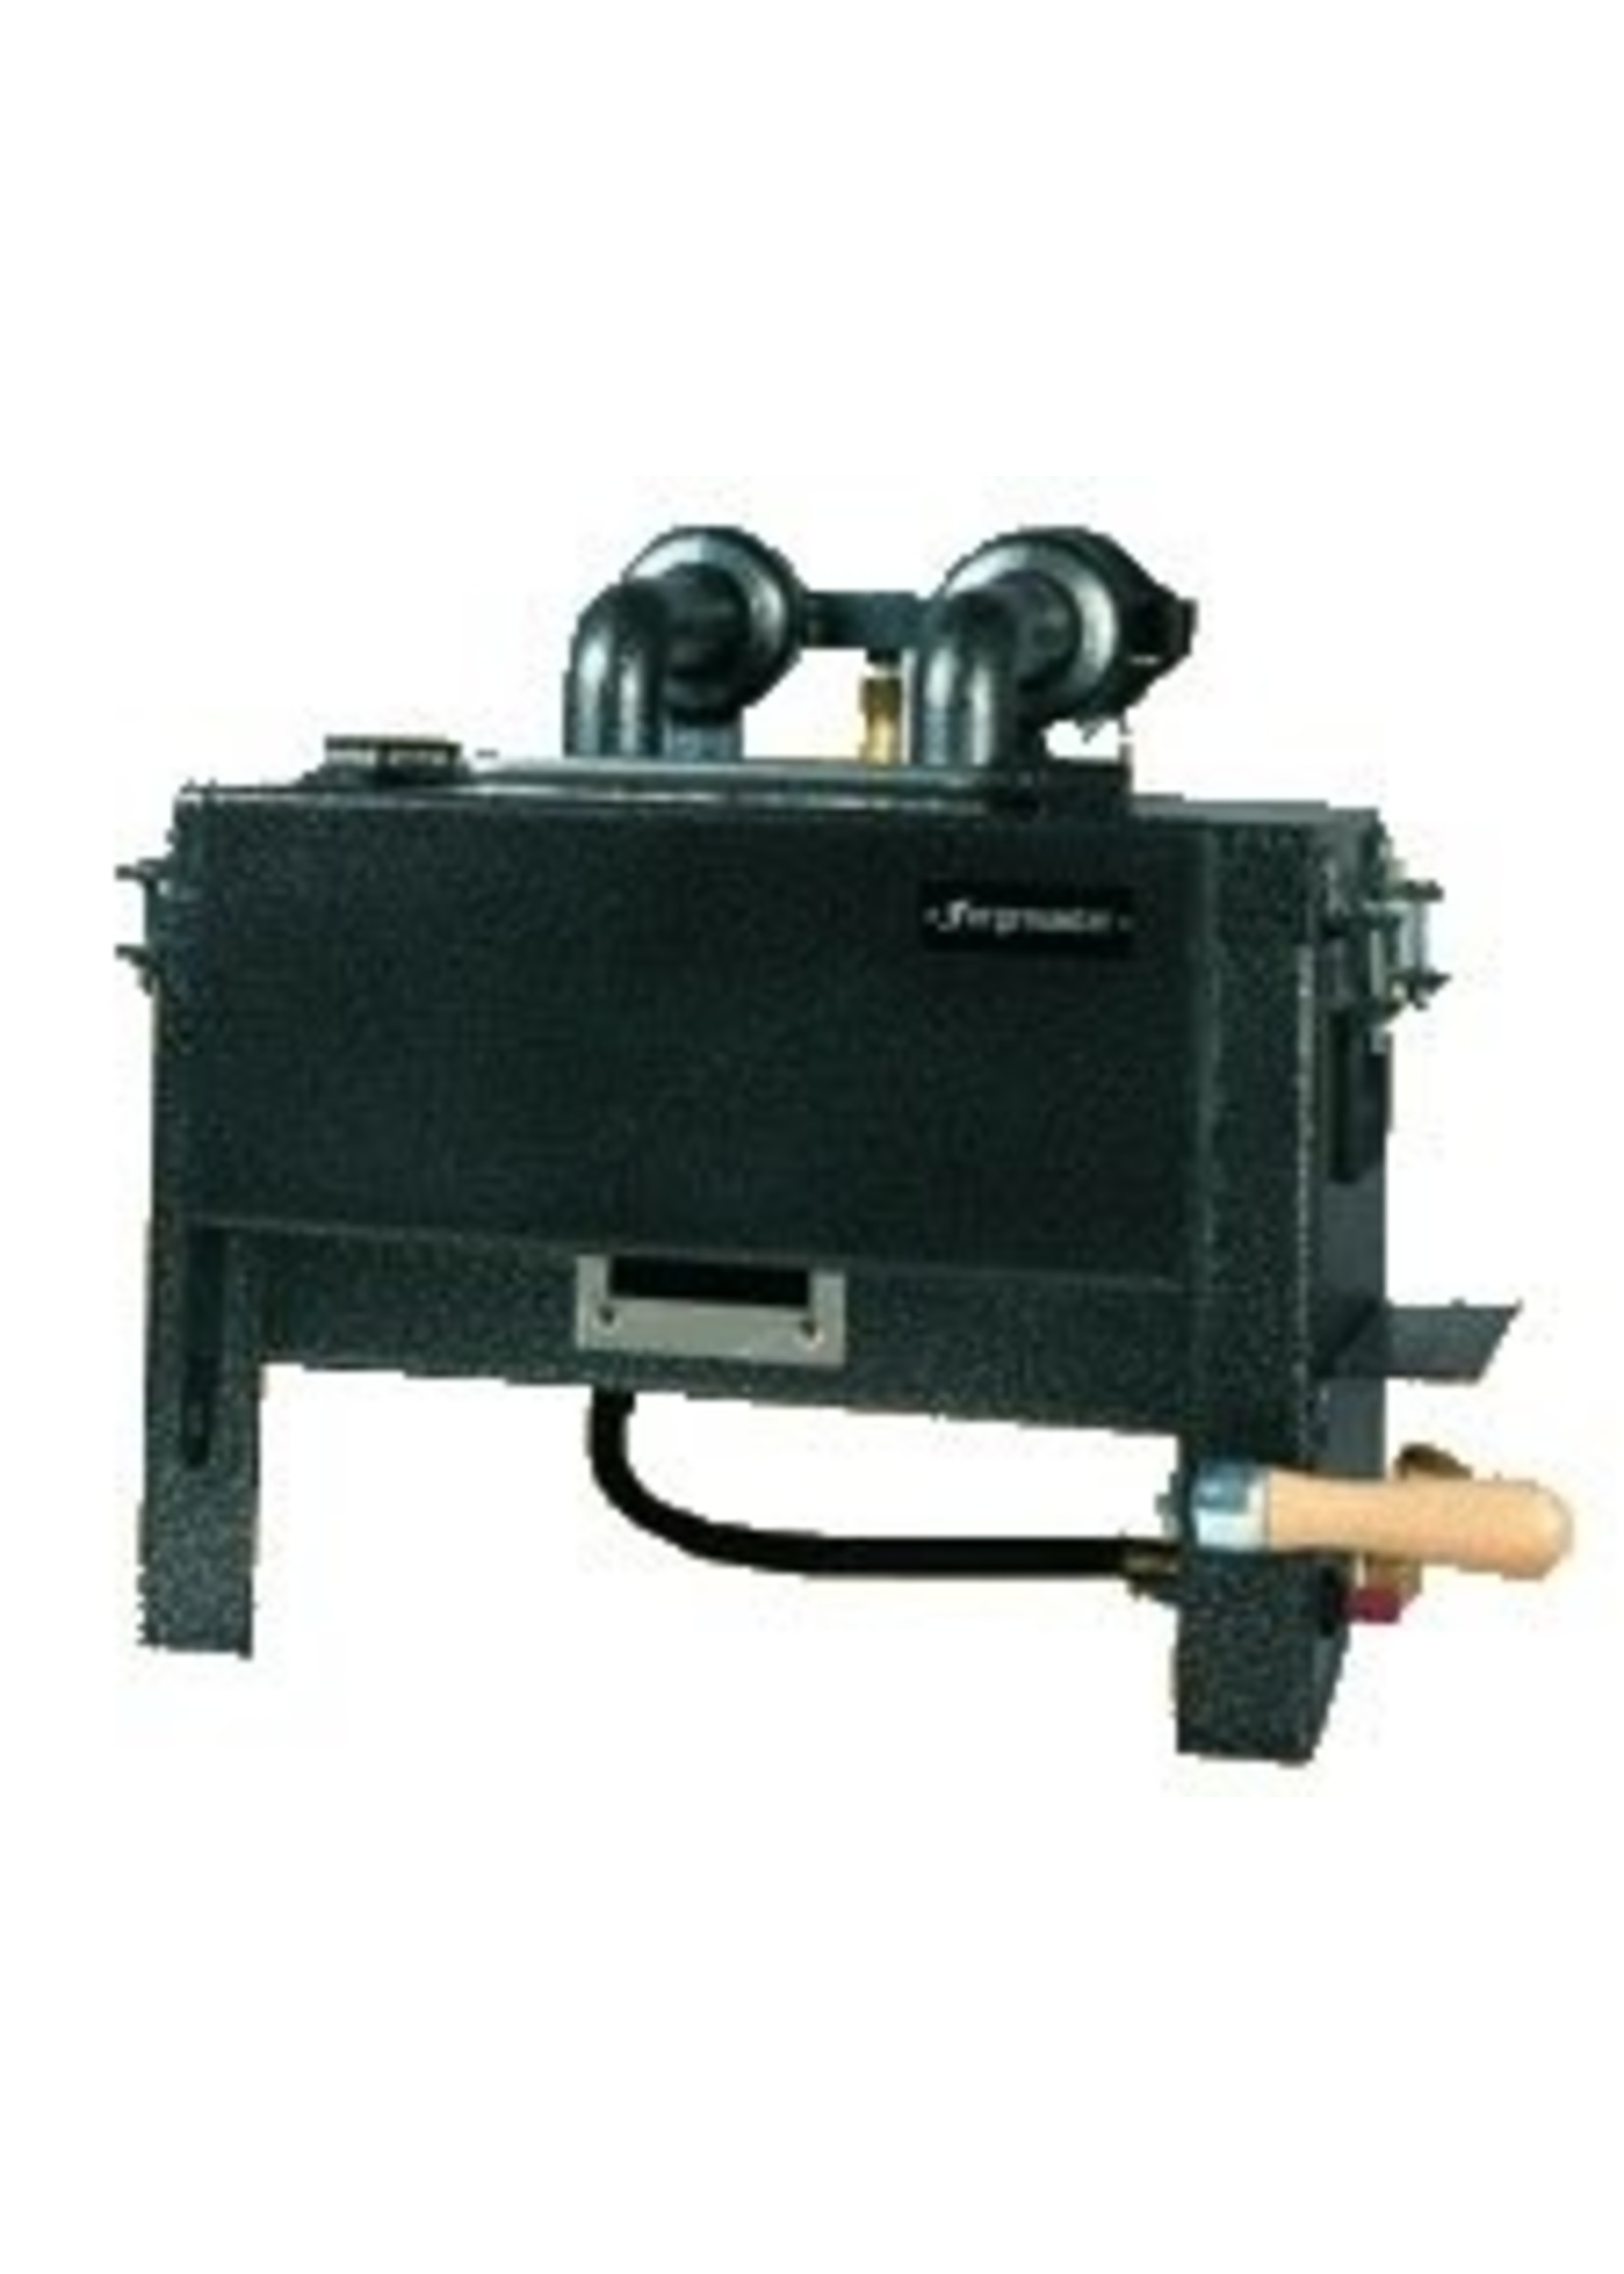 Forgemaster Forgemaster Blacksmith Forge w/ dual valve control